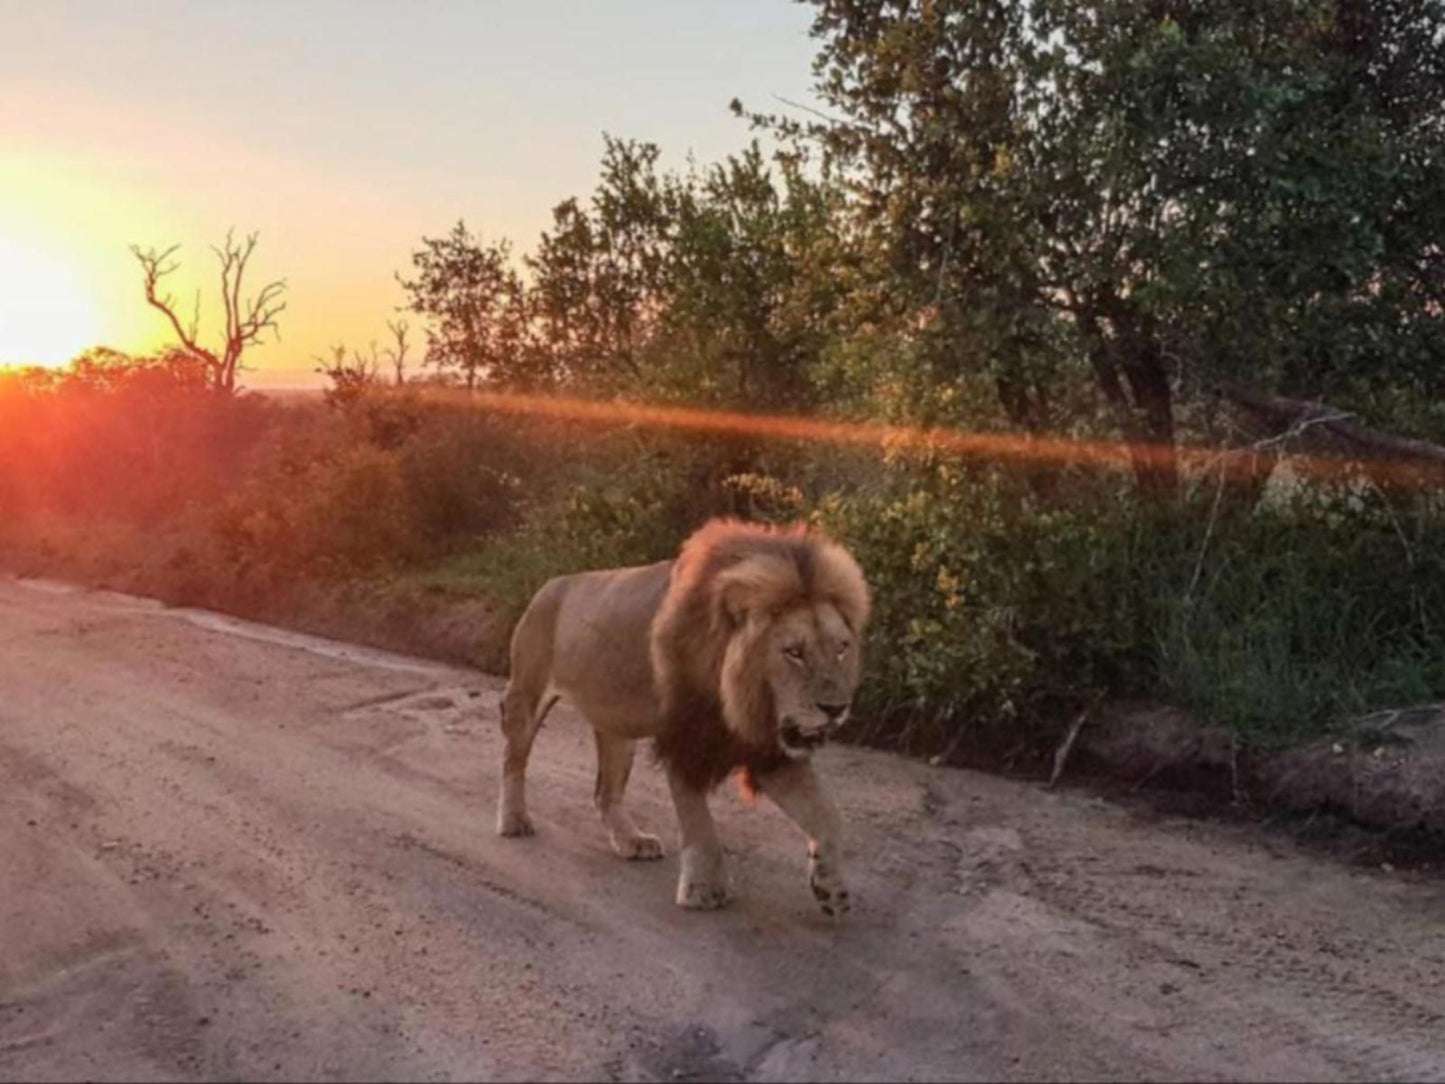 Nkorho Bush Lodge Sabi Sand Reserve Mpumalanga South Africa Lion, Mammal, Animal, Big Cat, Predator